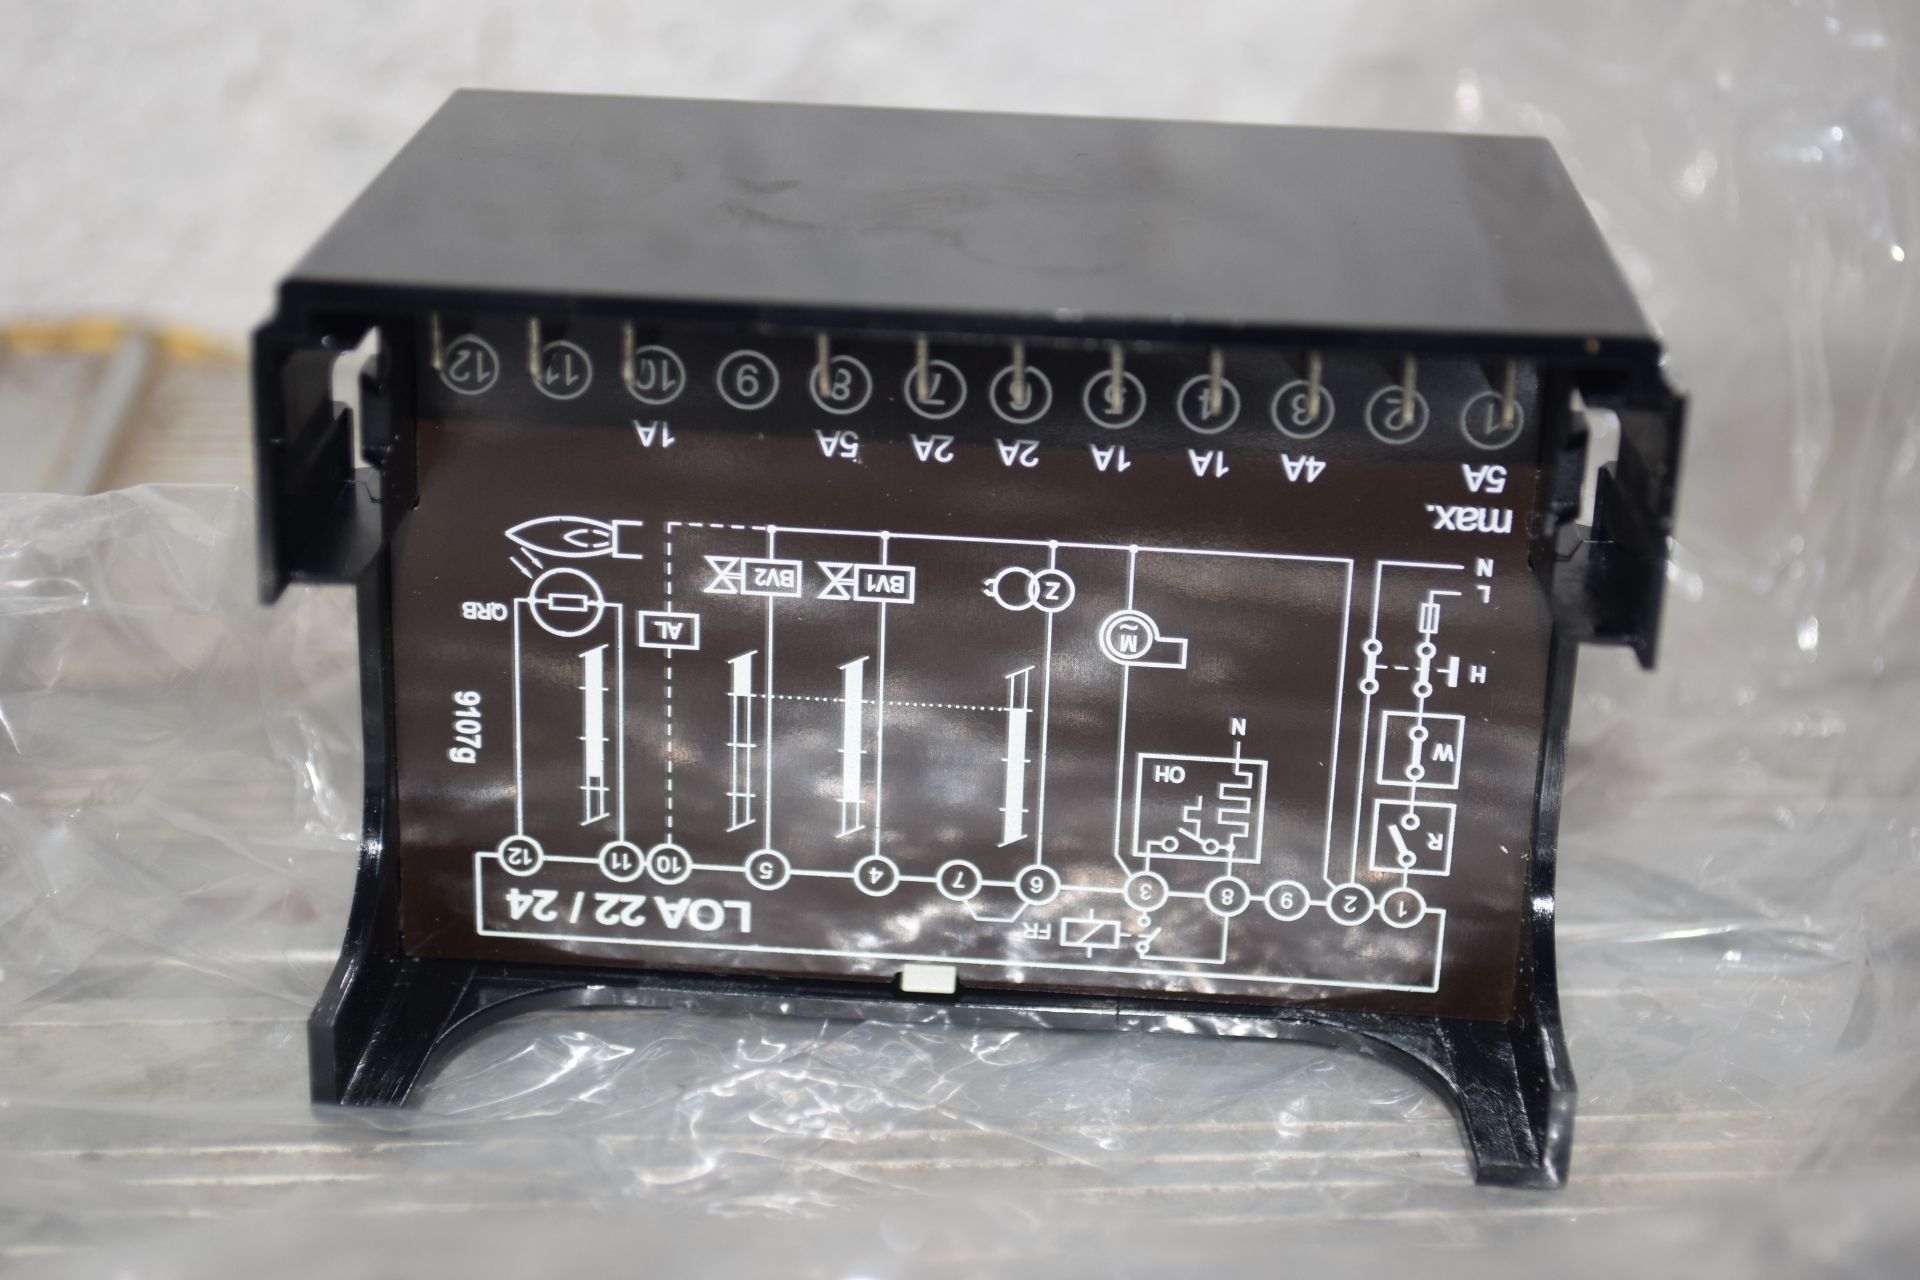 Burner control box seimans type - Image 2 of 2